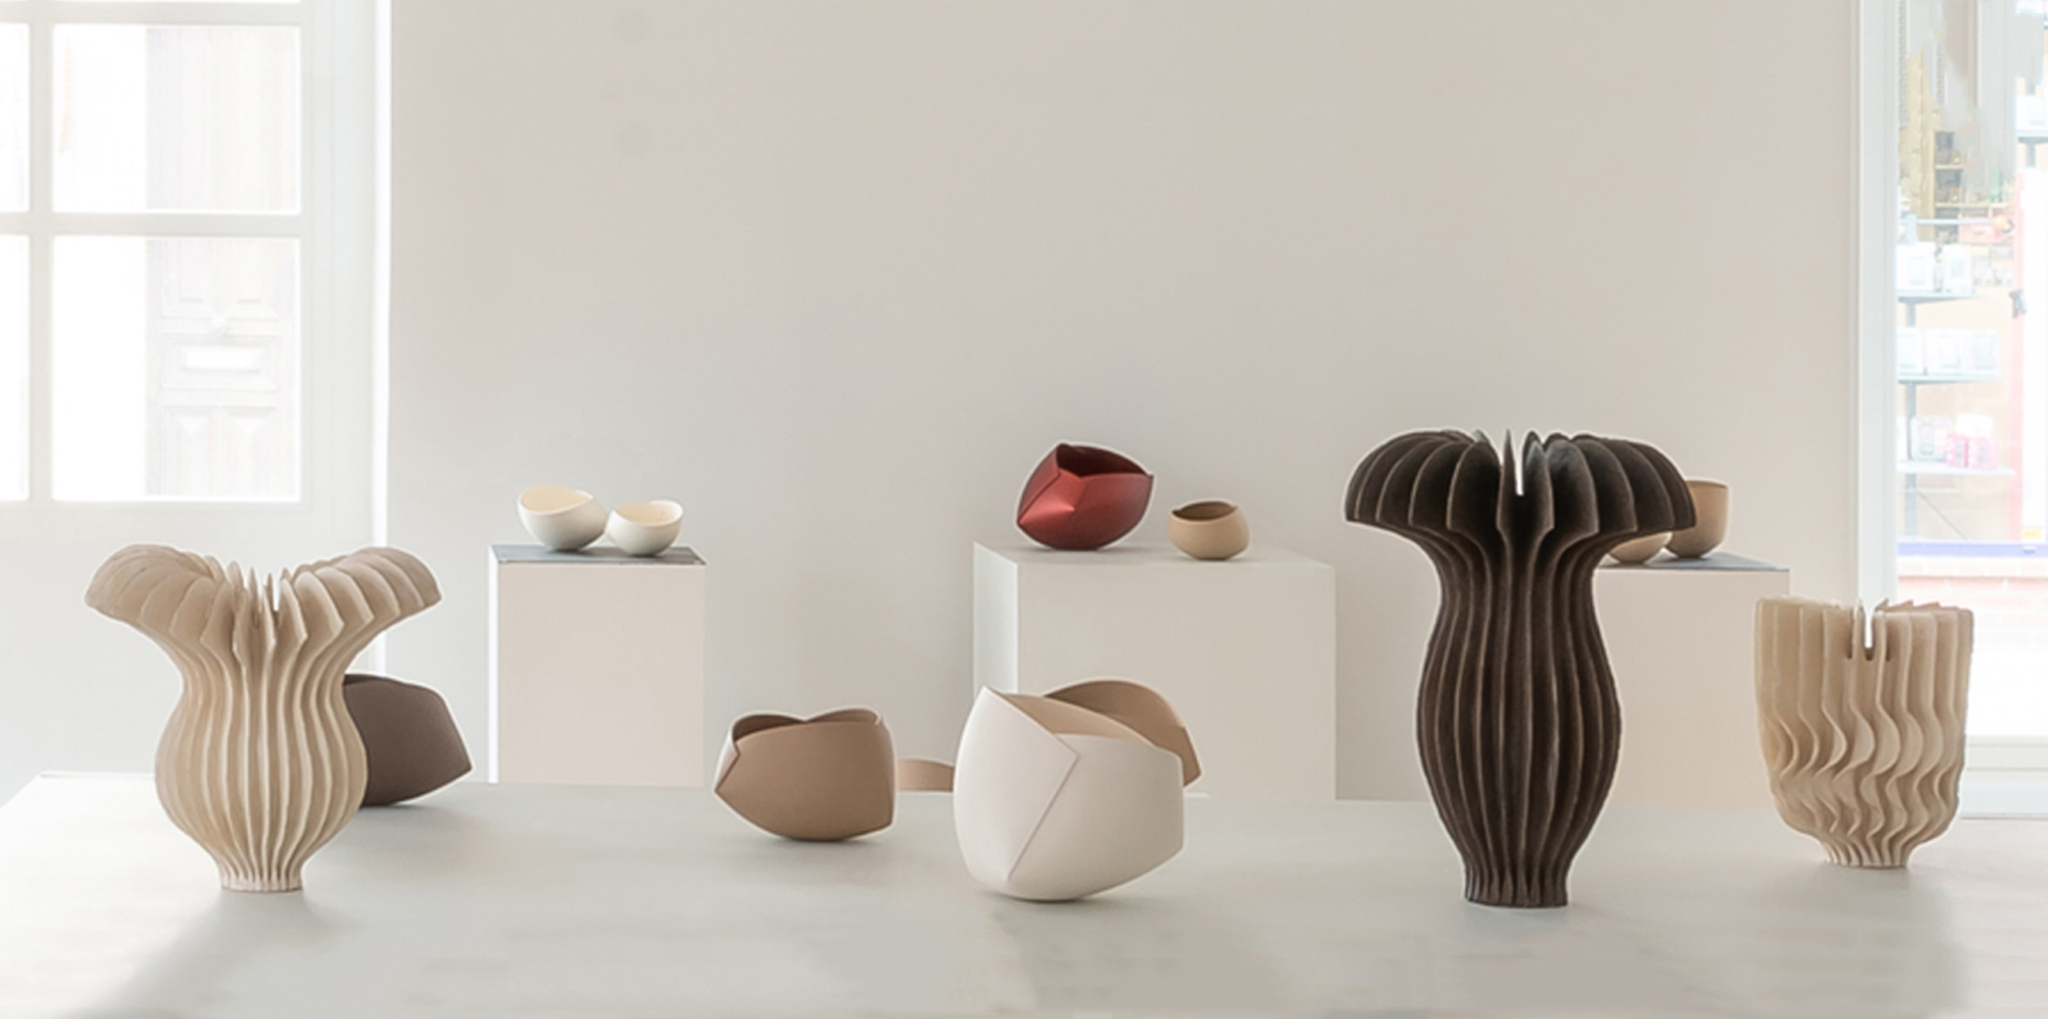 Ursula Morley Price - Ann Van Hoey - contemporary ceramic - ceramic sculpture - Burgundy - ceramic gallery - French art gallery - exhibition in France - ceramic - stoneware - clay